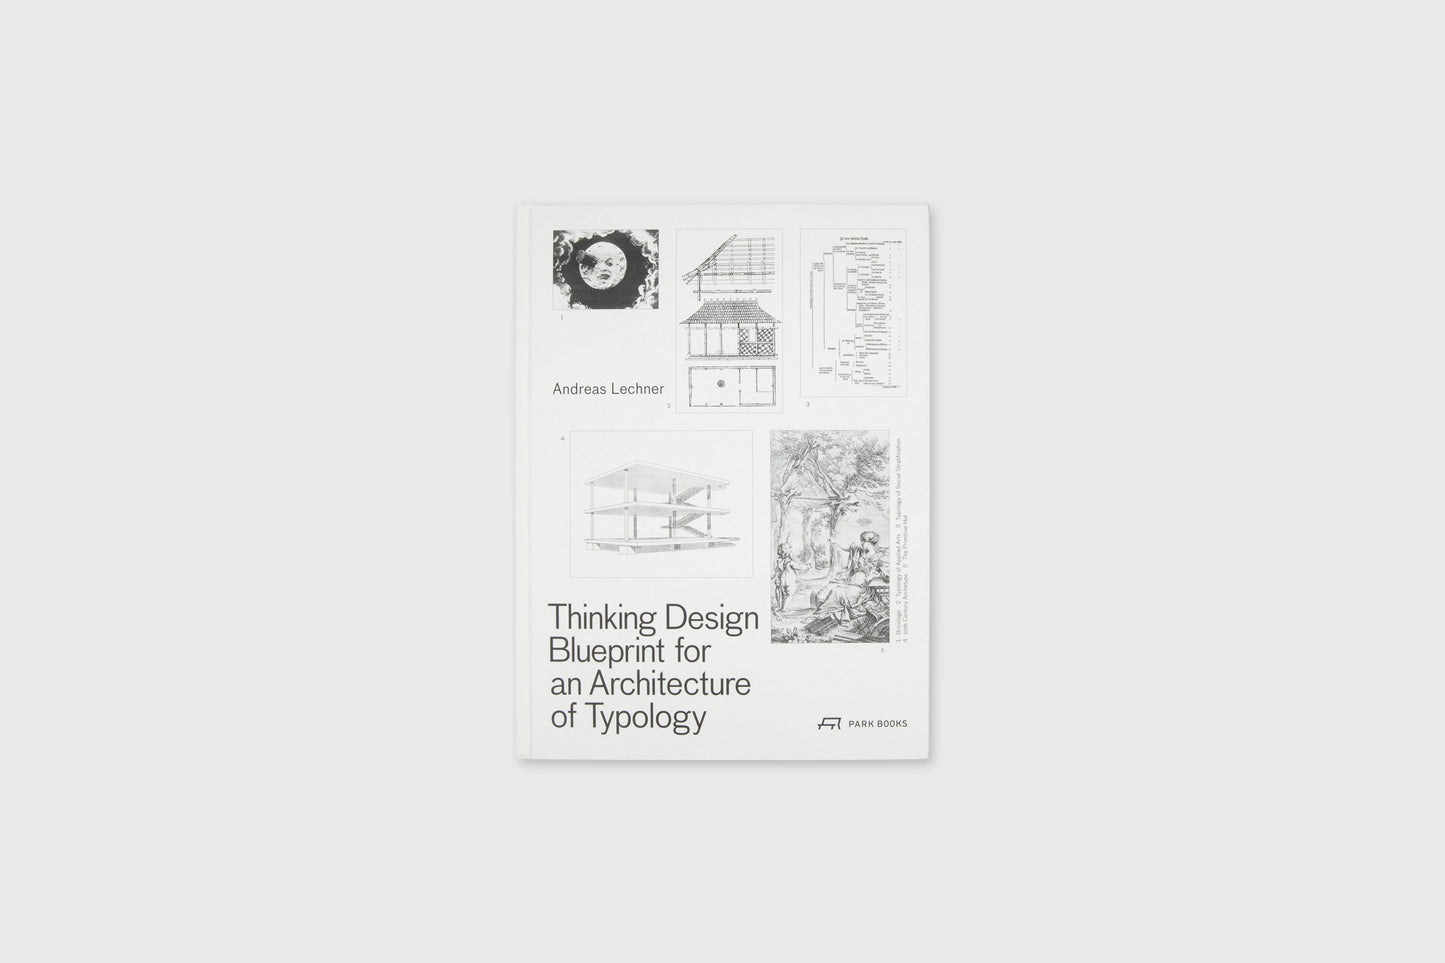 Thinking Design